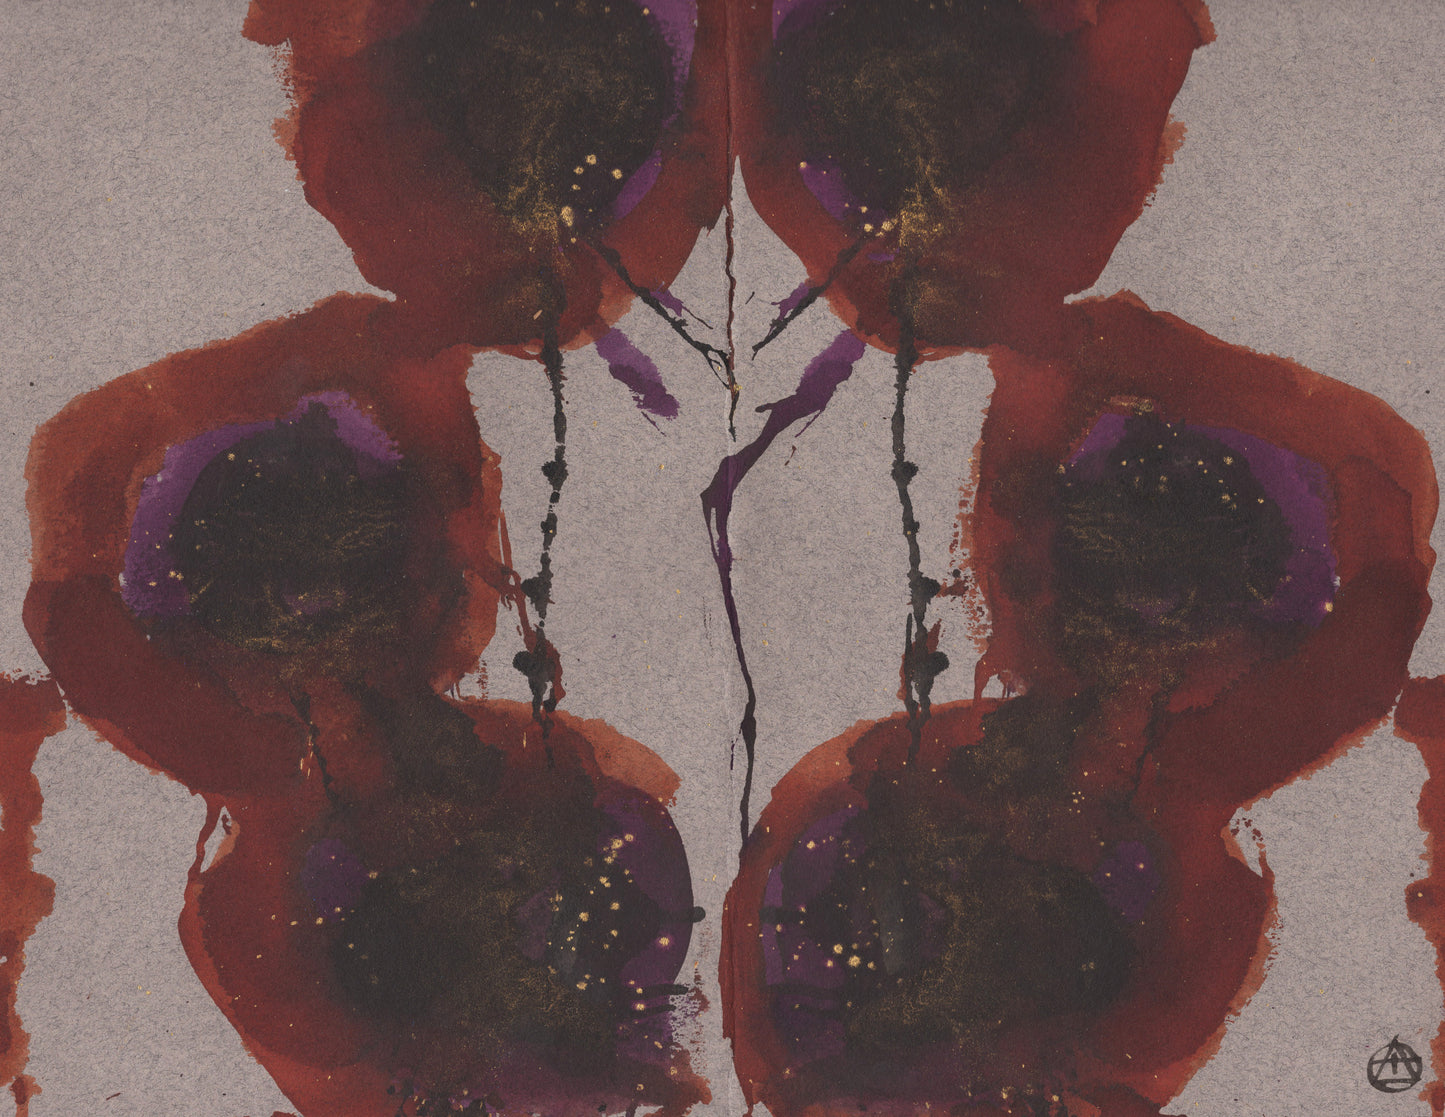 Rebecca Rose - Hemoglobin, 9x12 original unframed painting